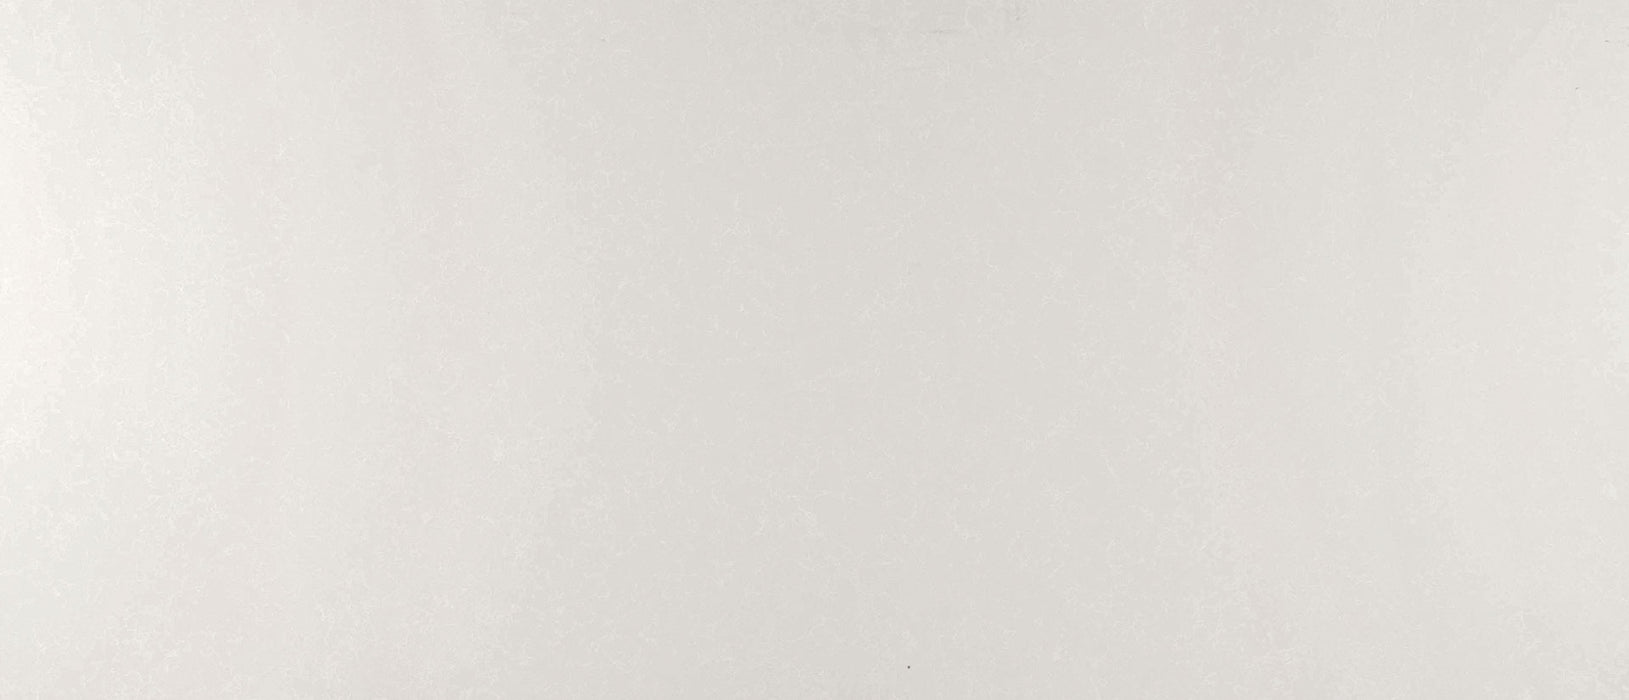 Perla white quartz countertop slab